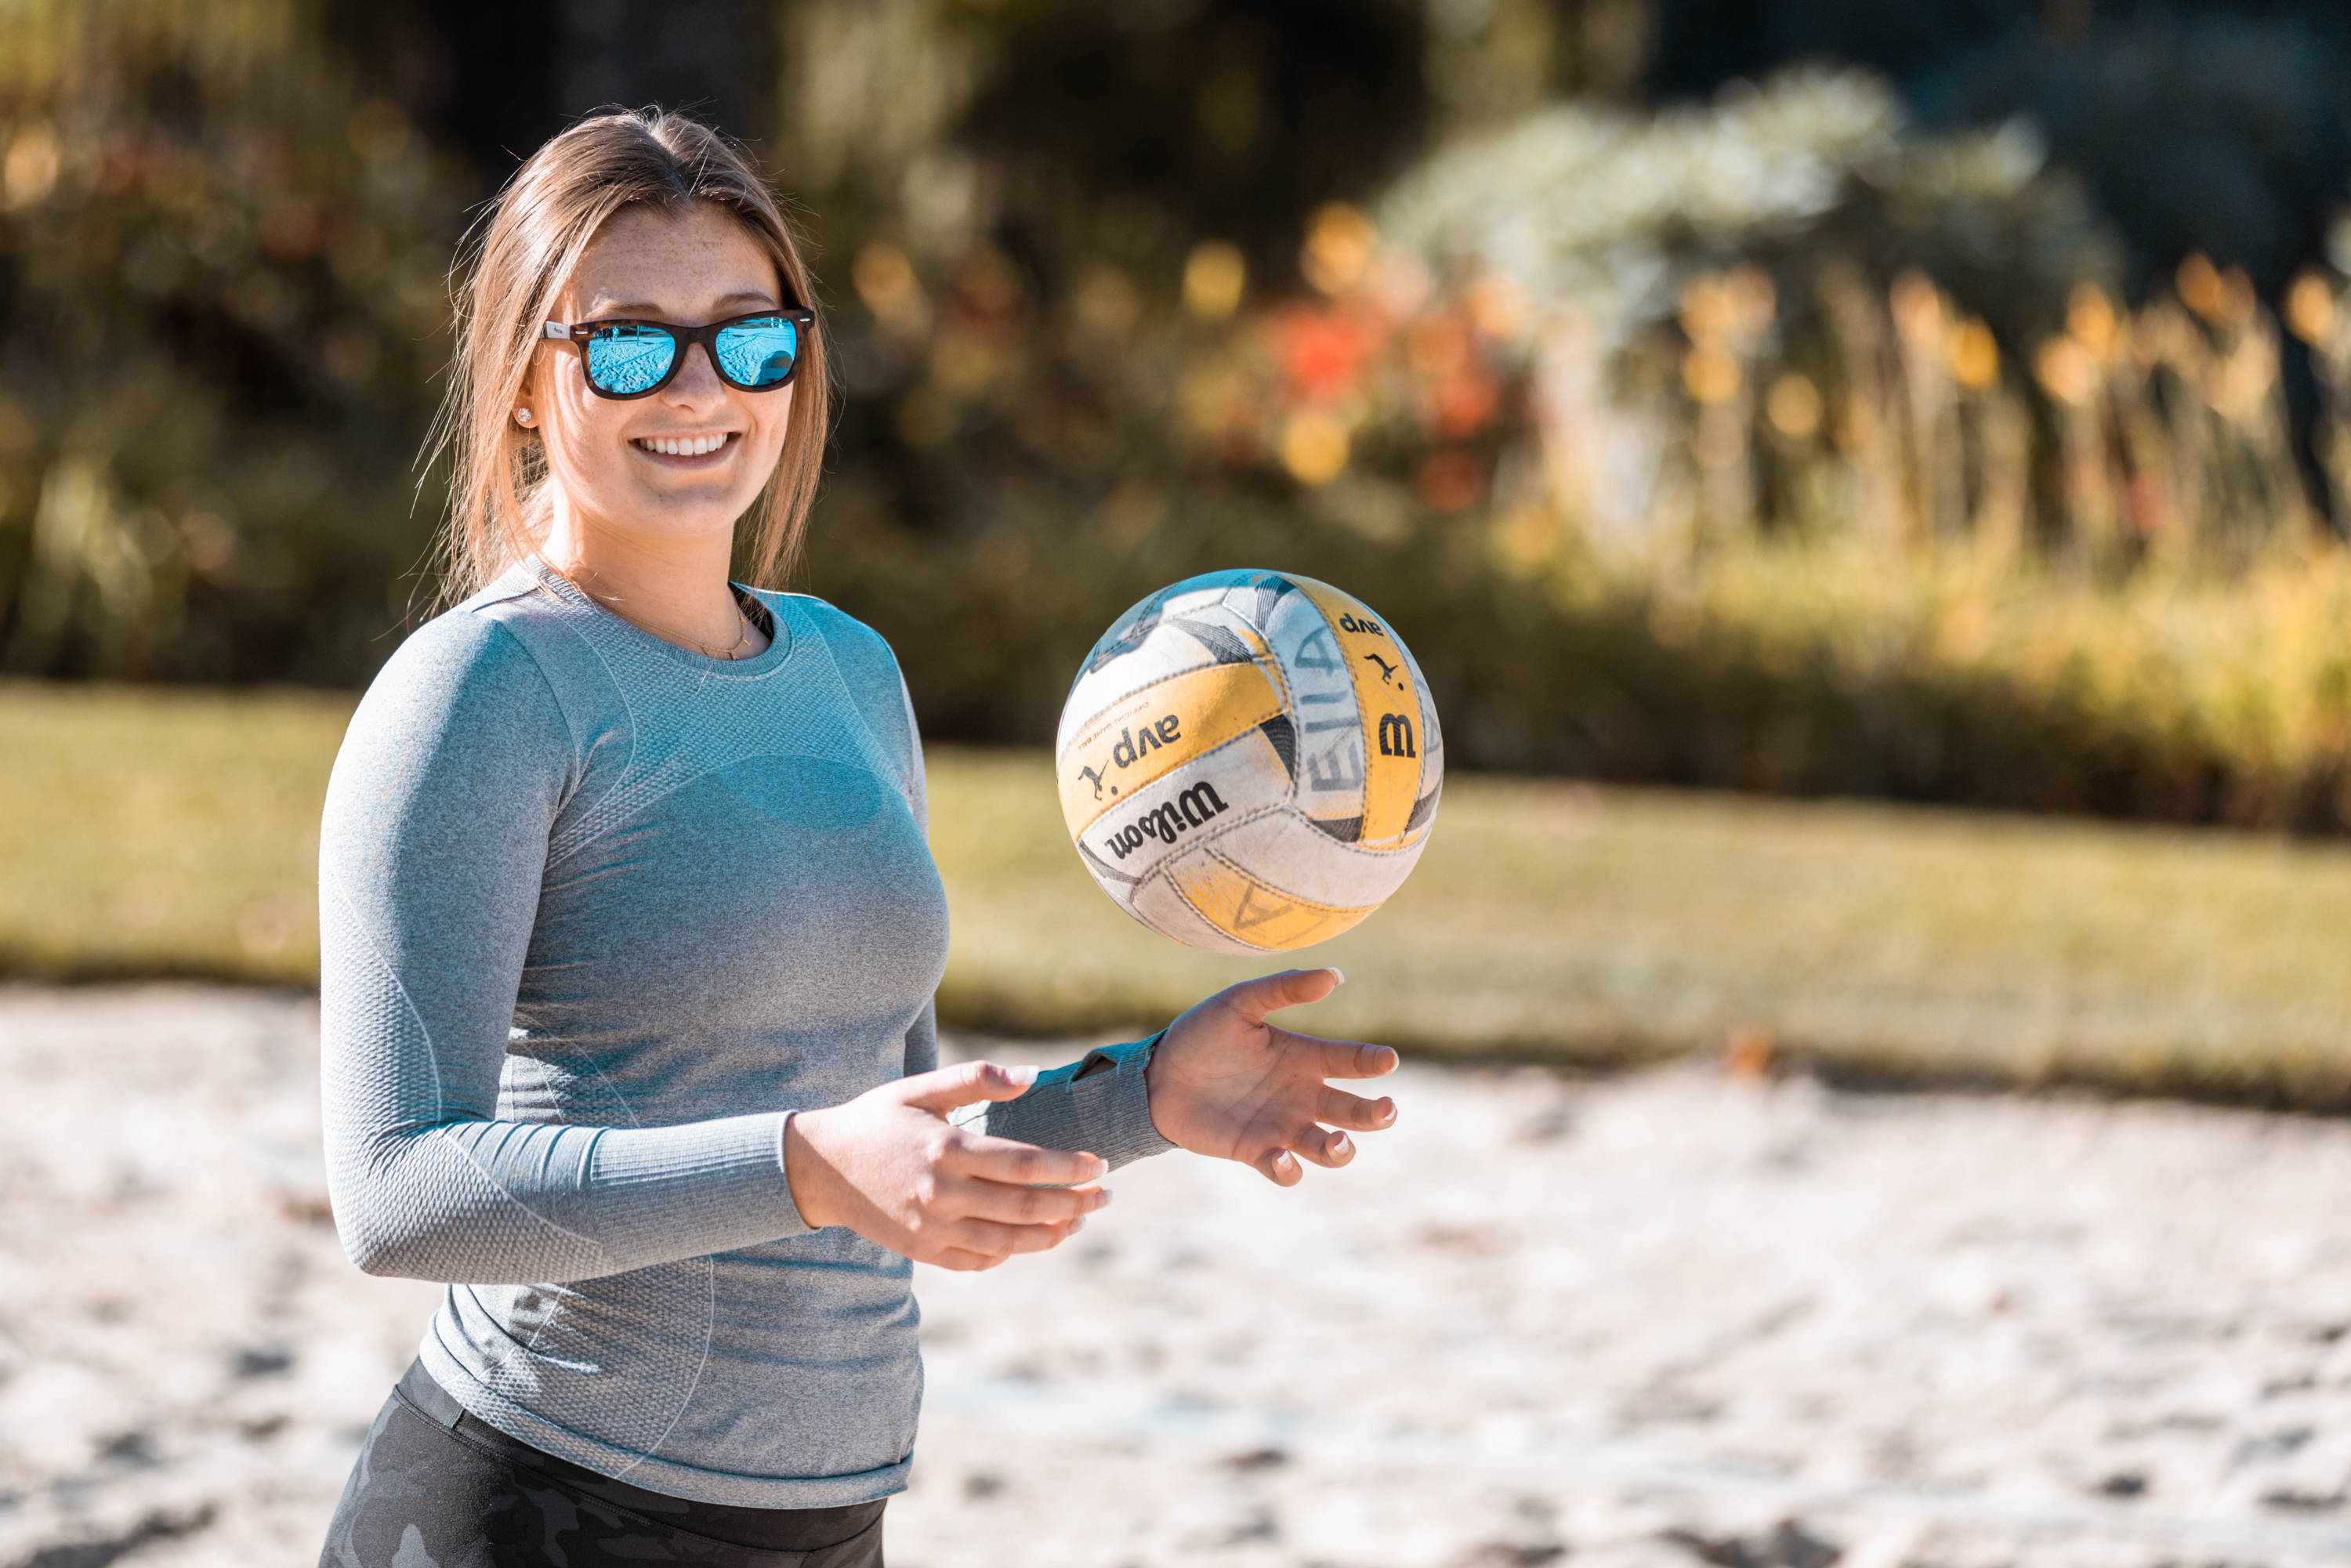 Volleyball player wearing tortoiseshell sunglasses